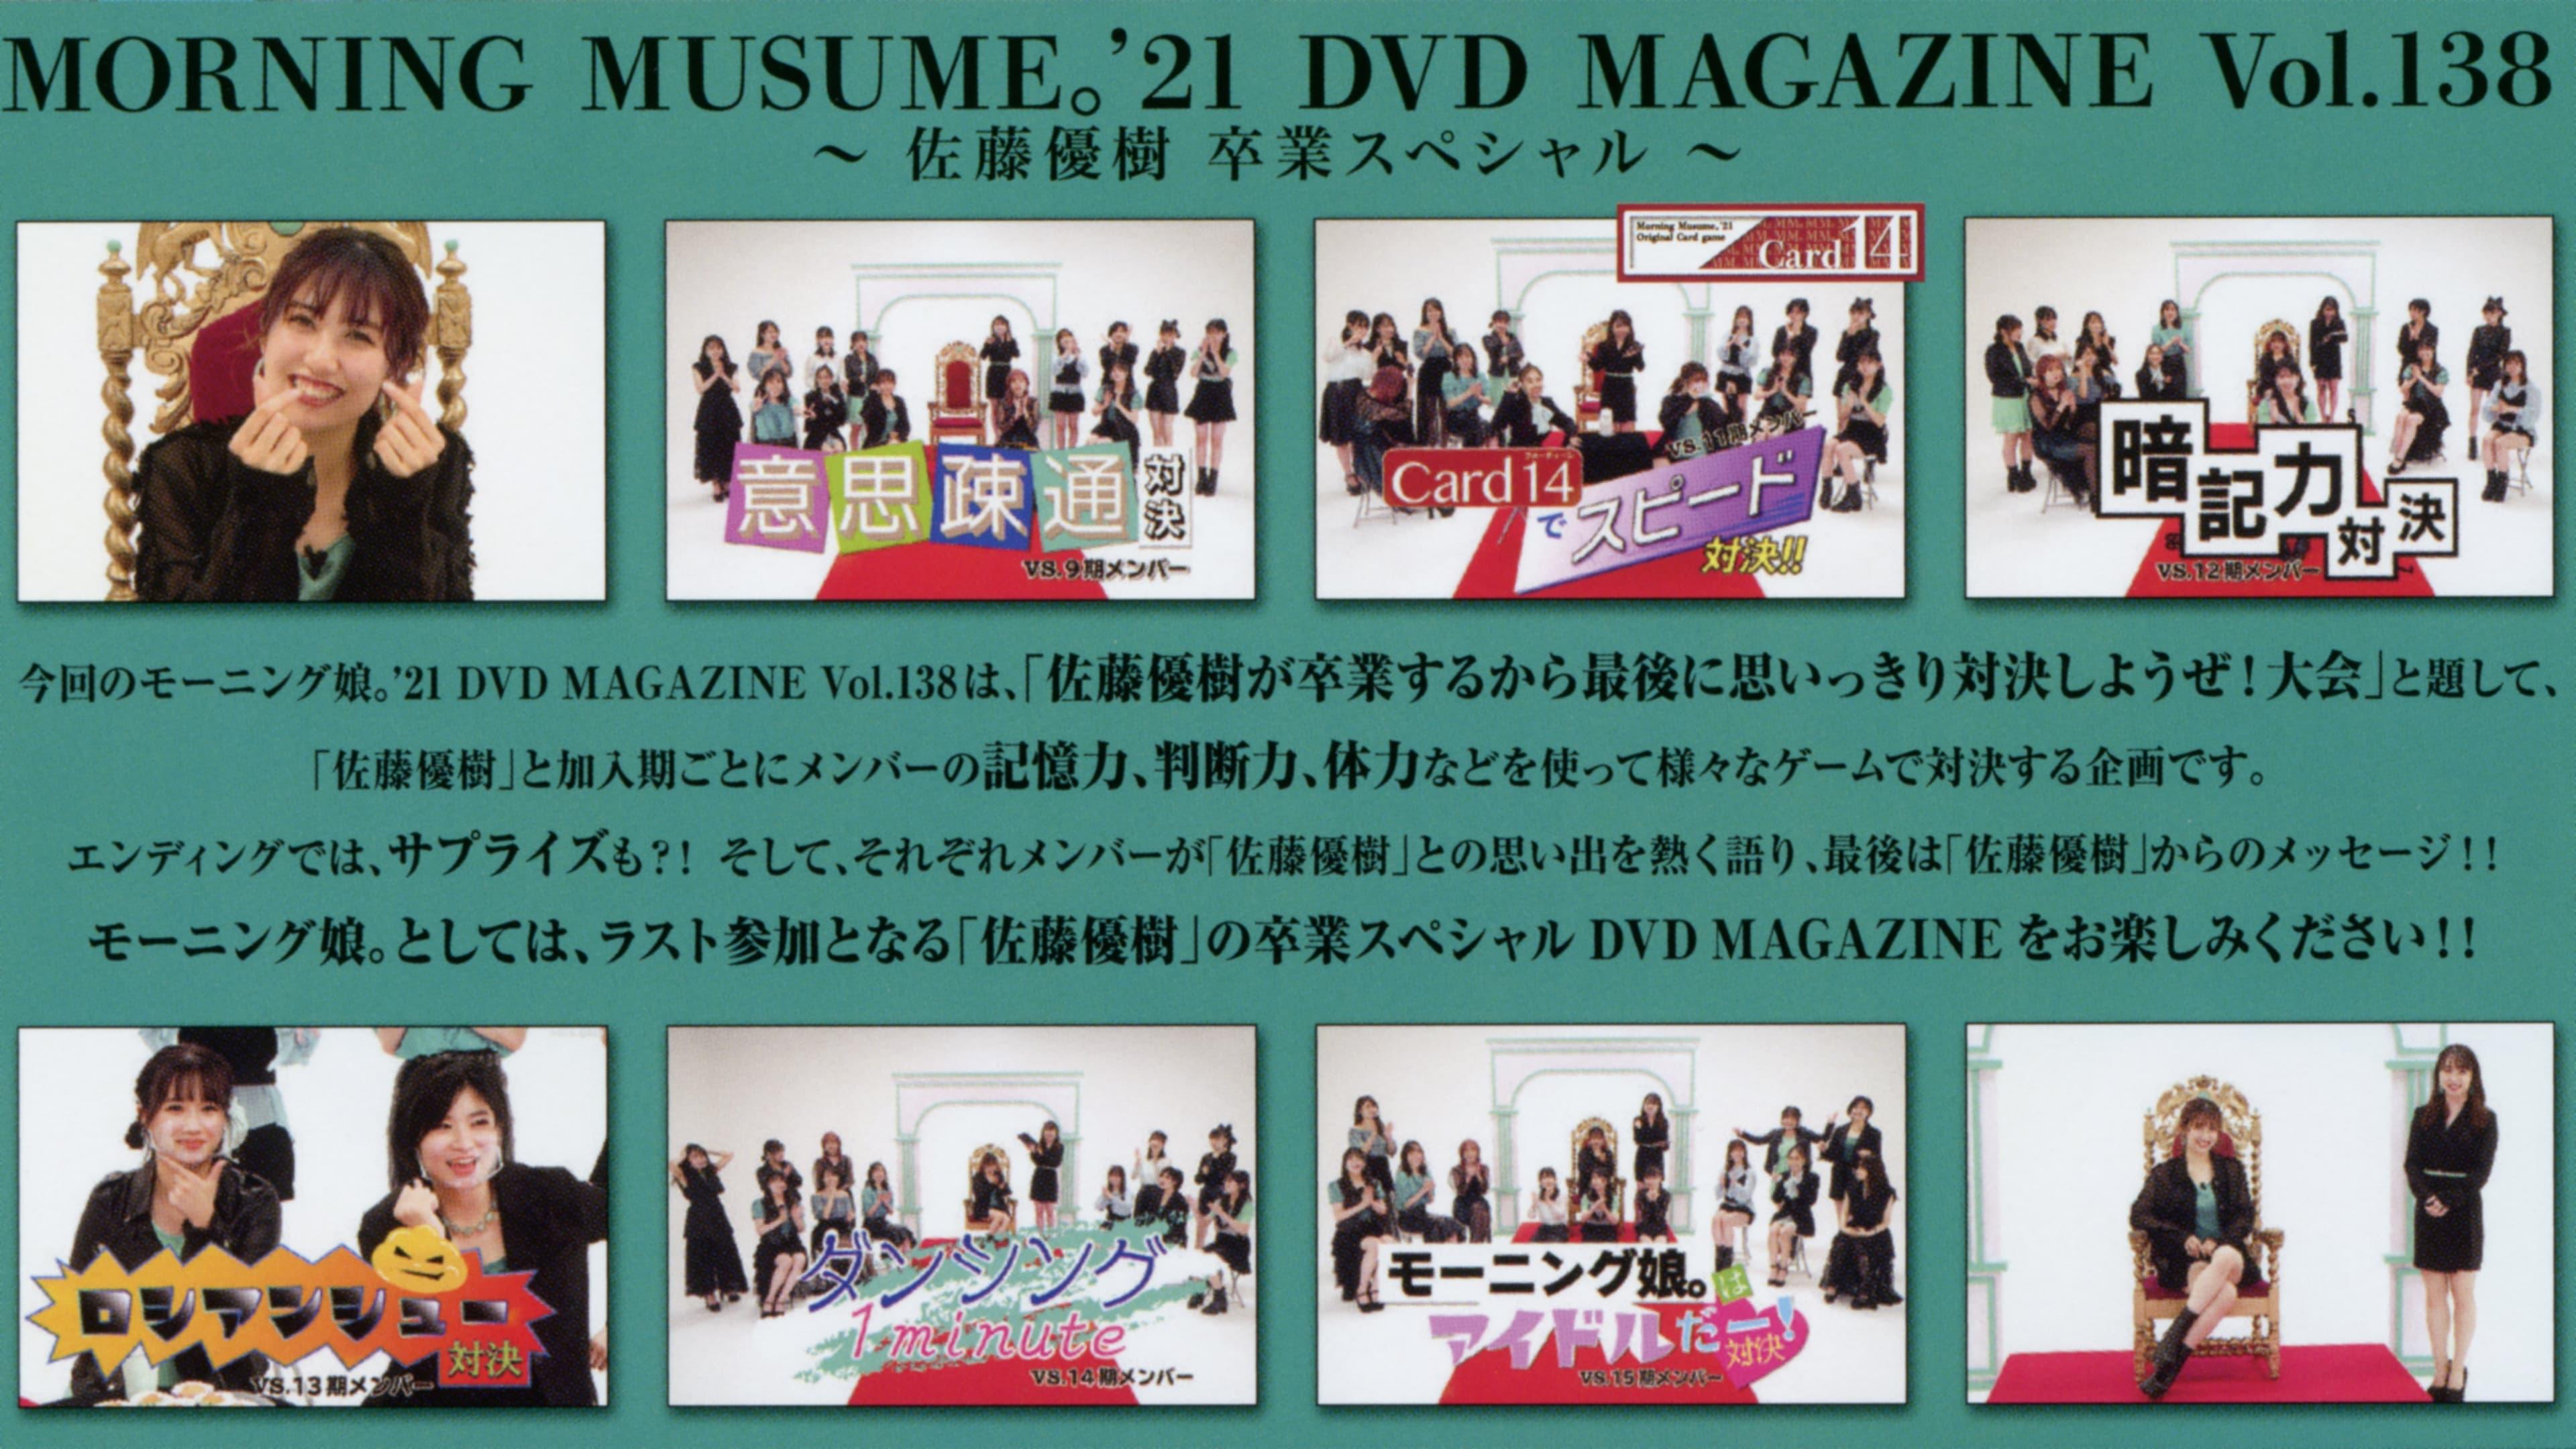 Morning Musume.'21 DVD Magazine Vol.138 backdrop